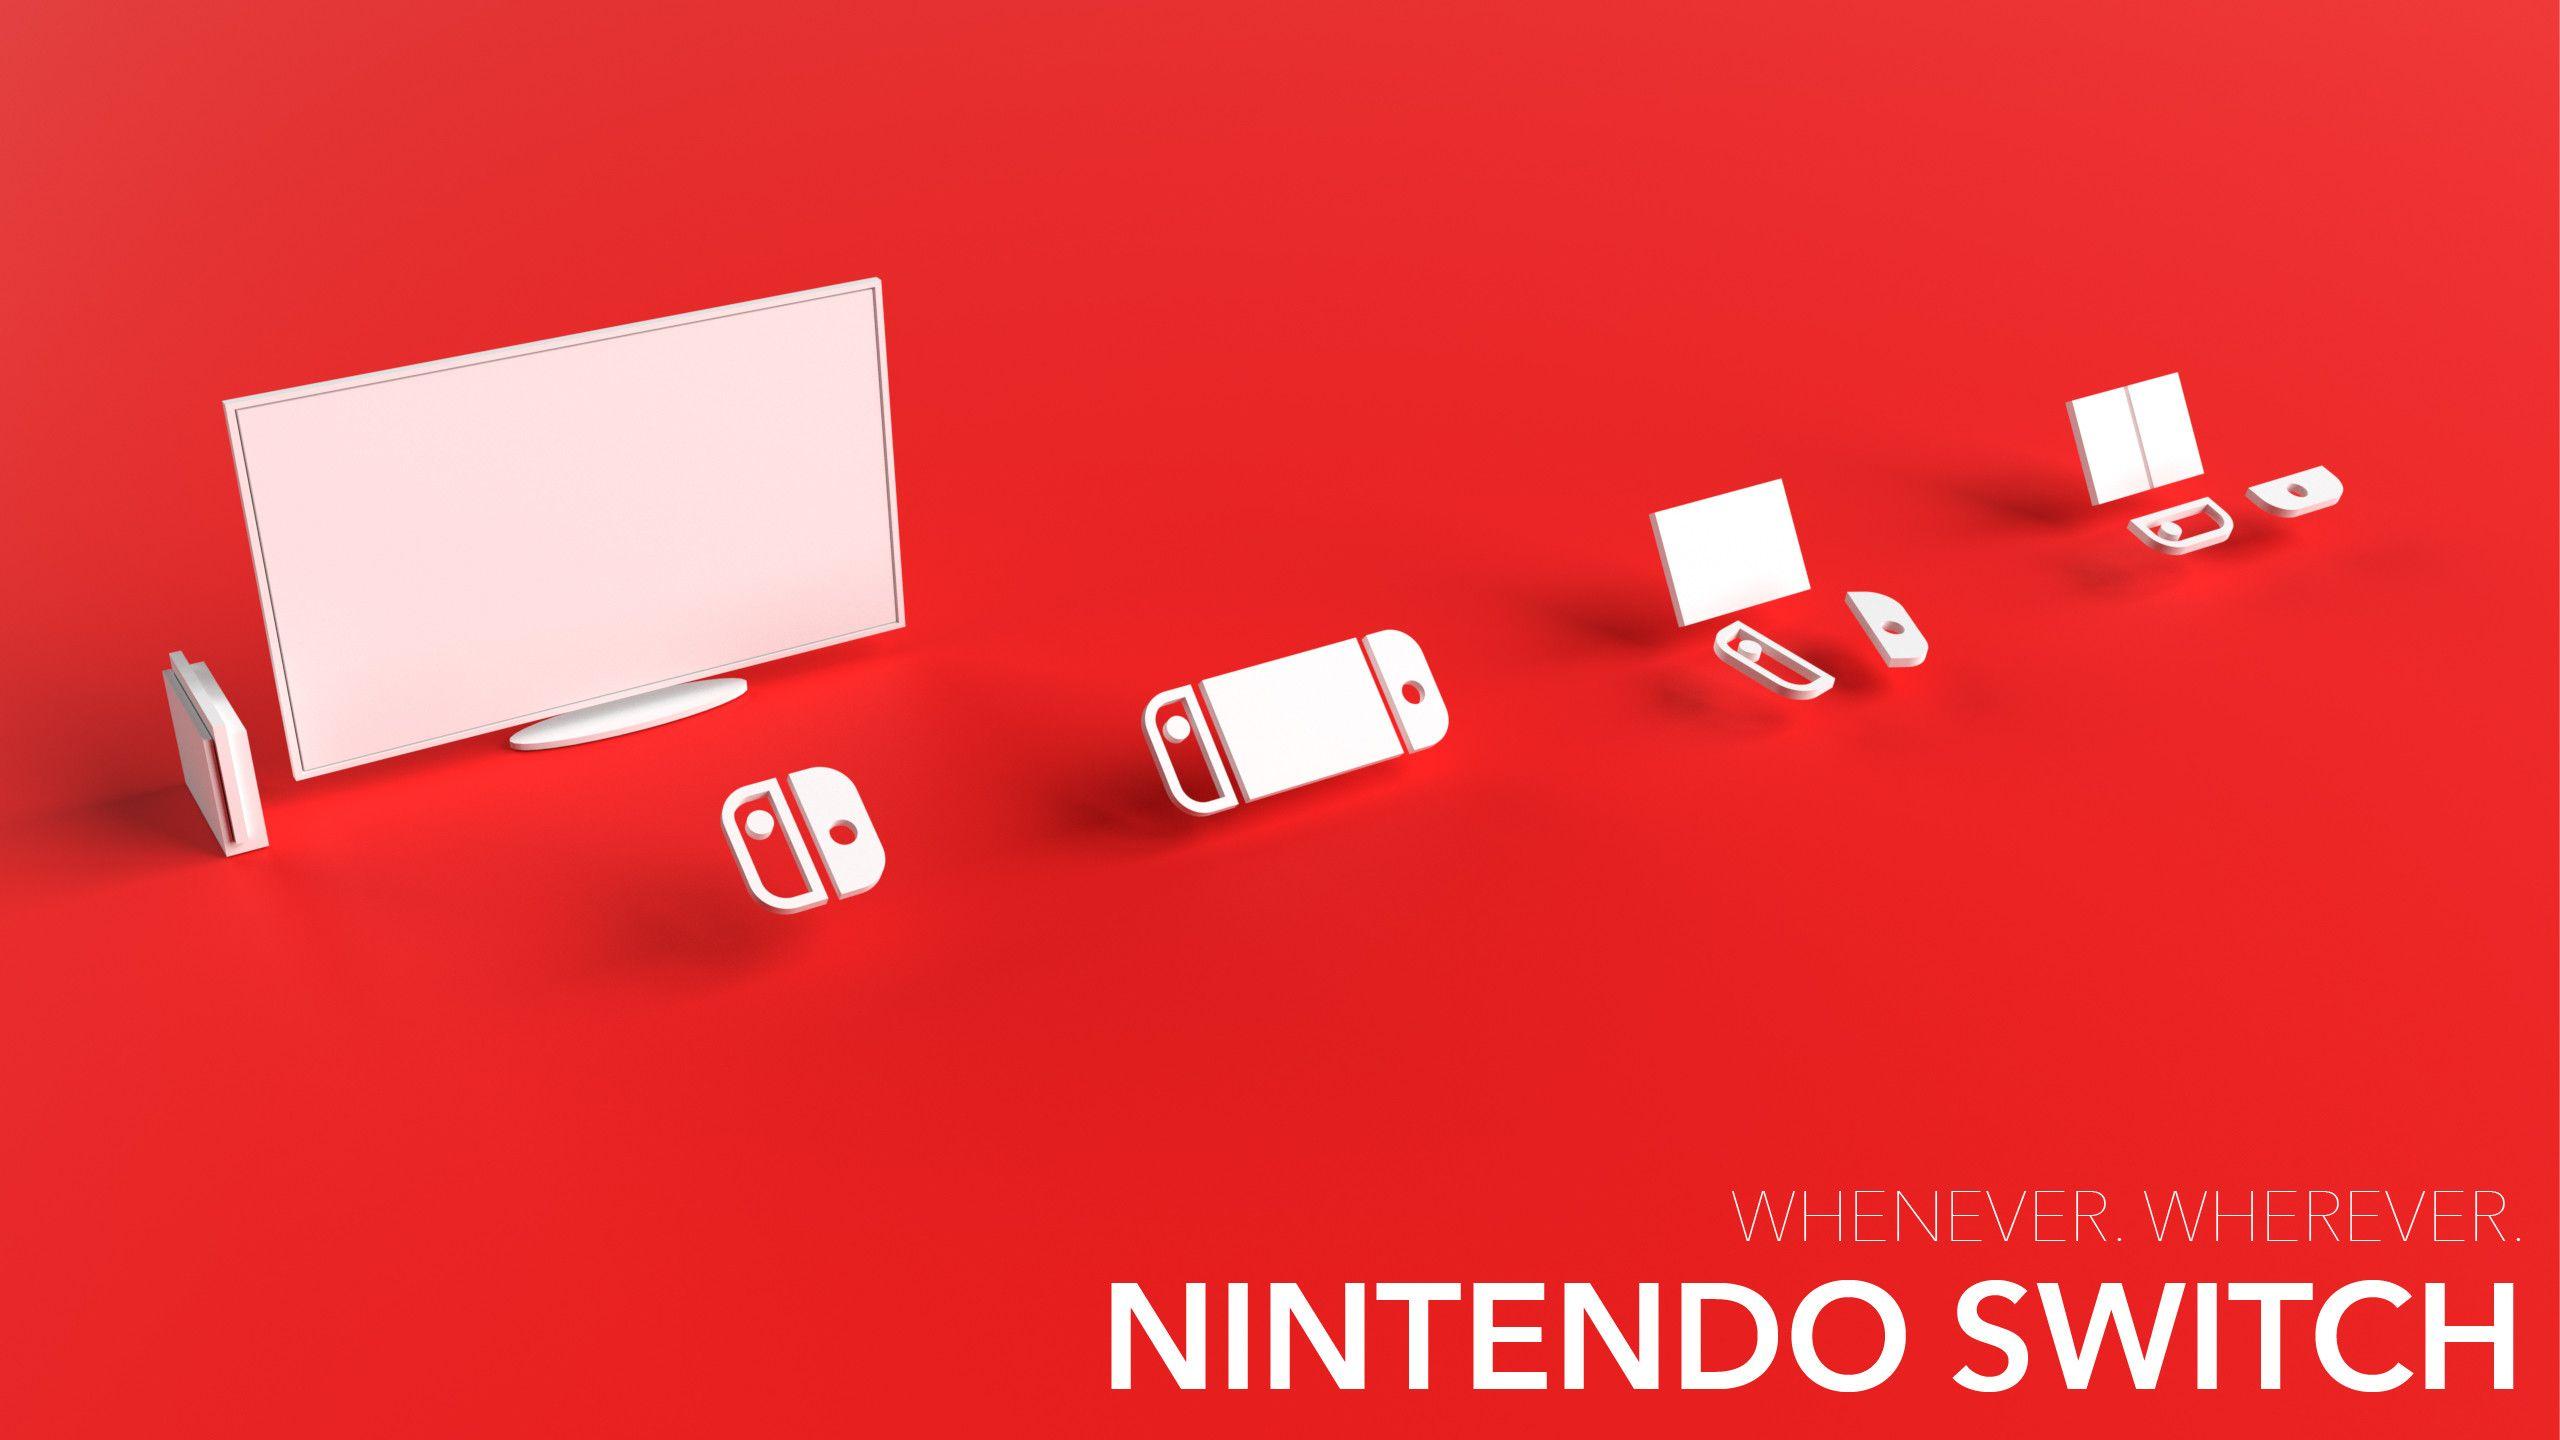 News  Hình nền lịch Nintendo tháng 1 cho điện thoại  NintendoVN  All  love for DS 2DS 3DS Wii Switch